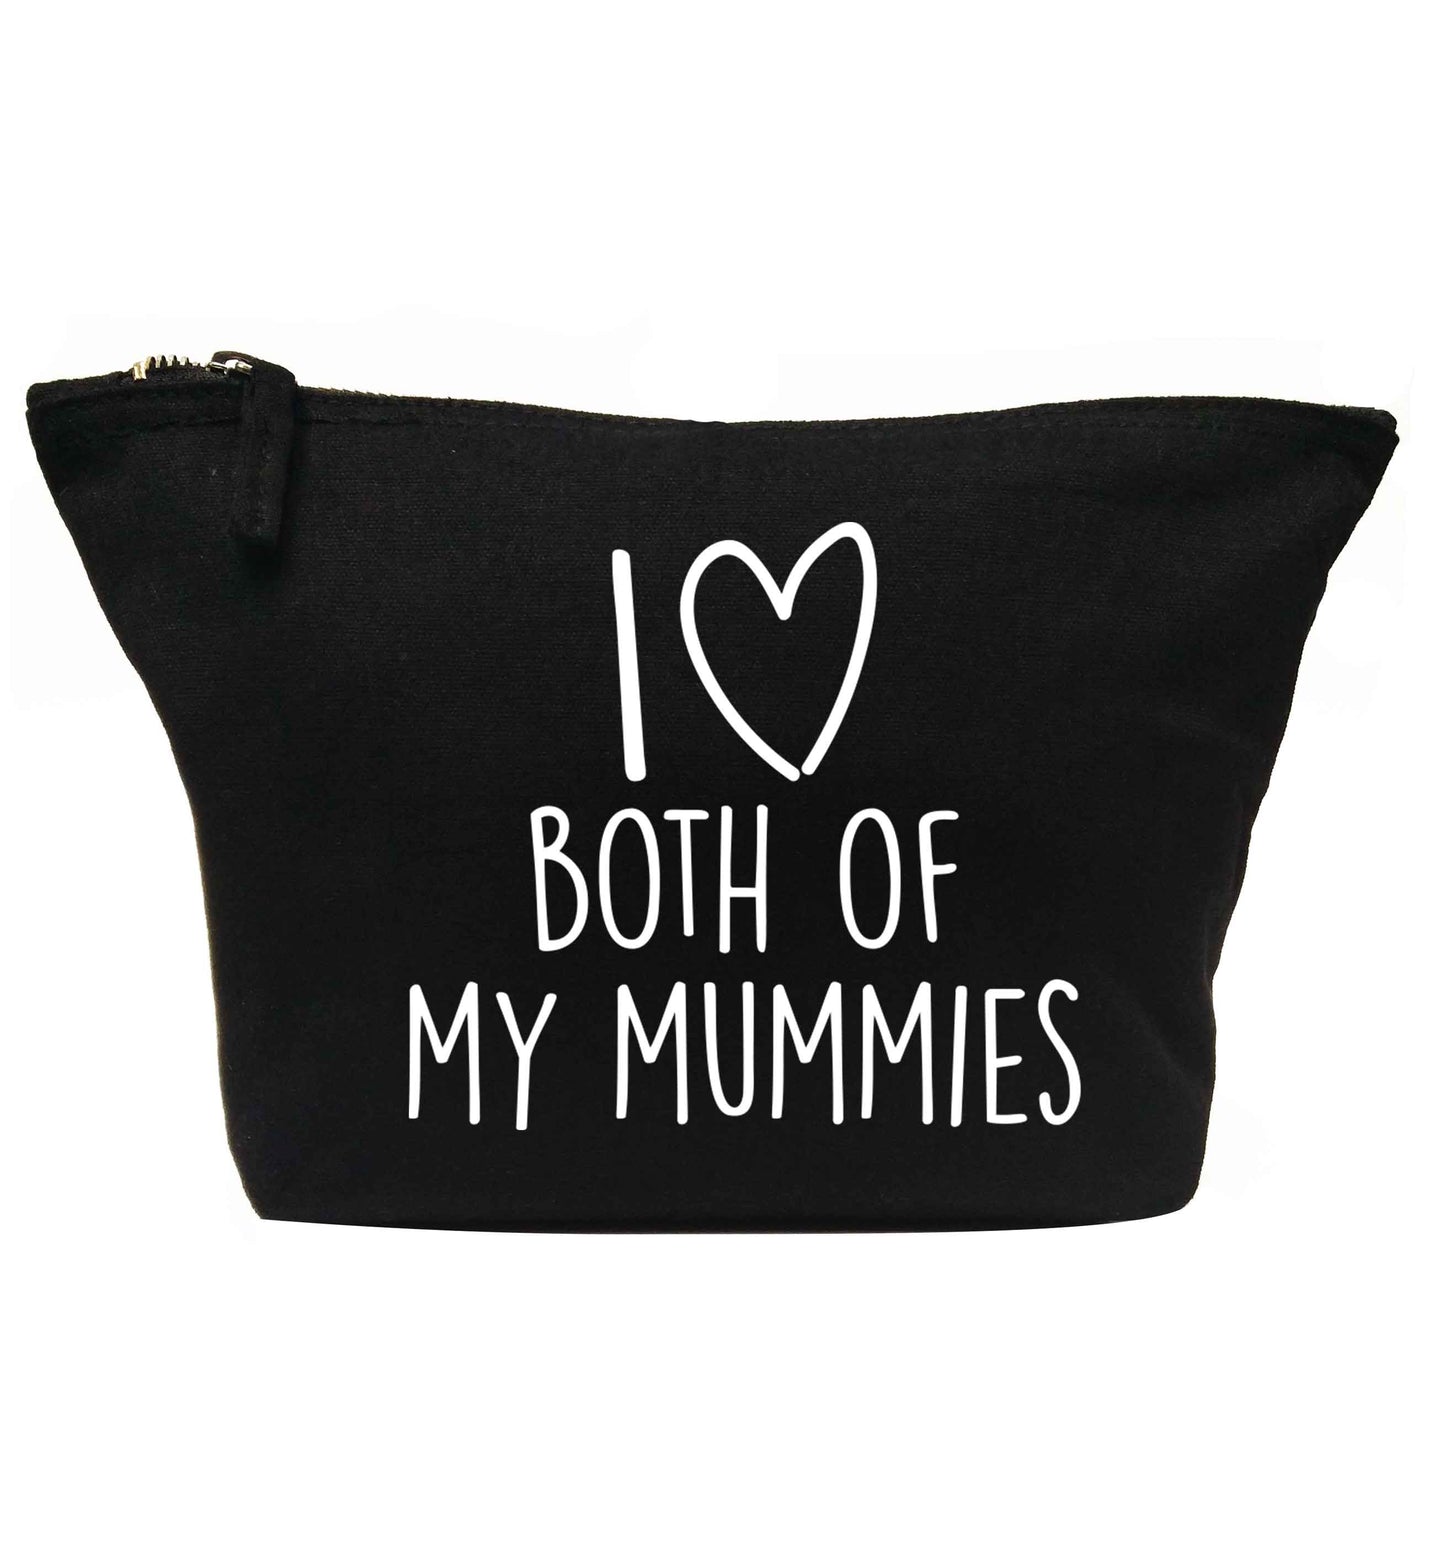 I love both of my mummies | Makeup / wash bag